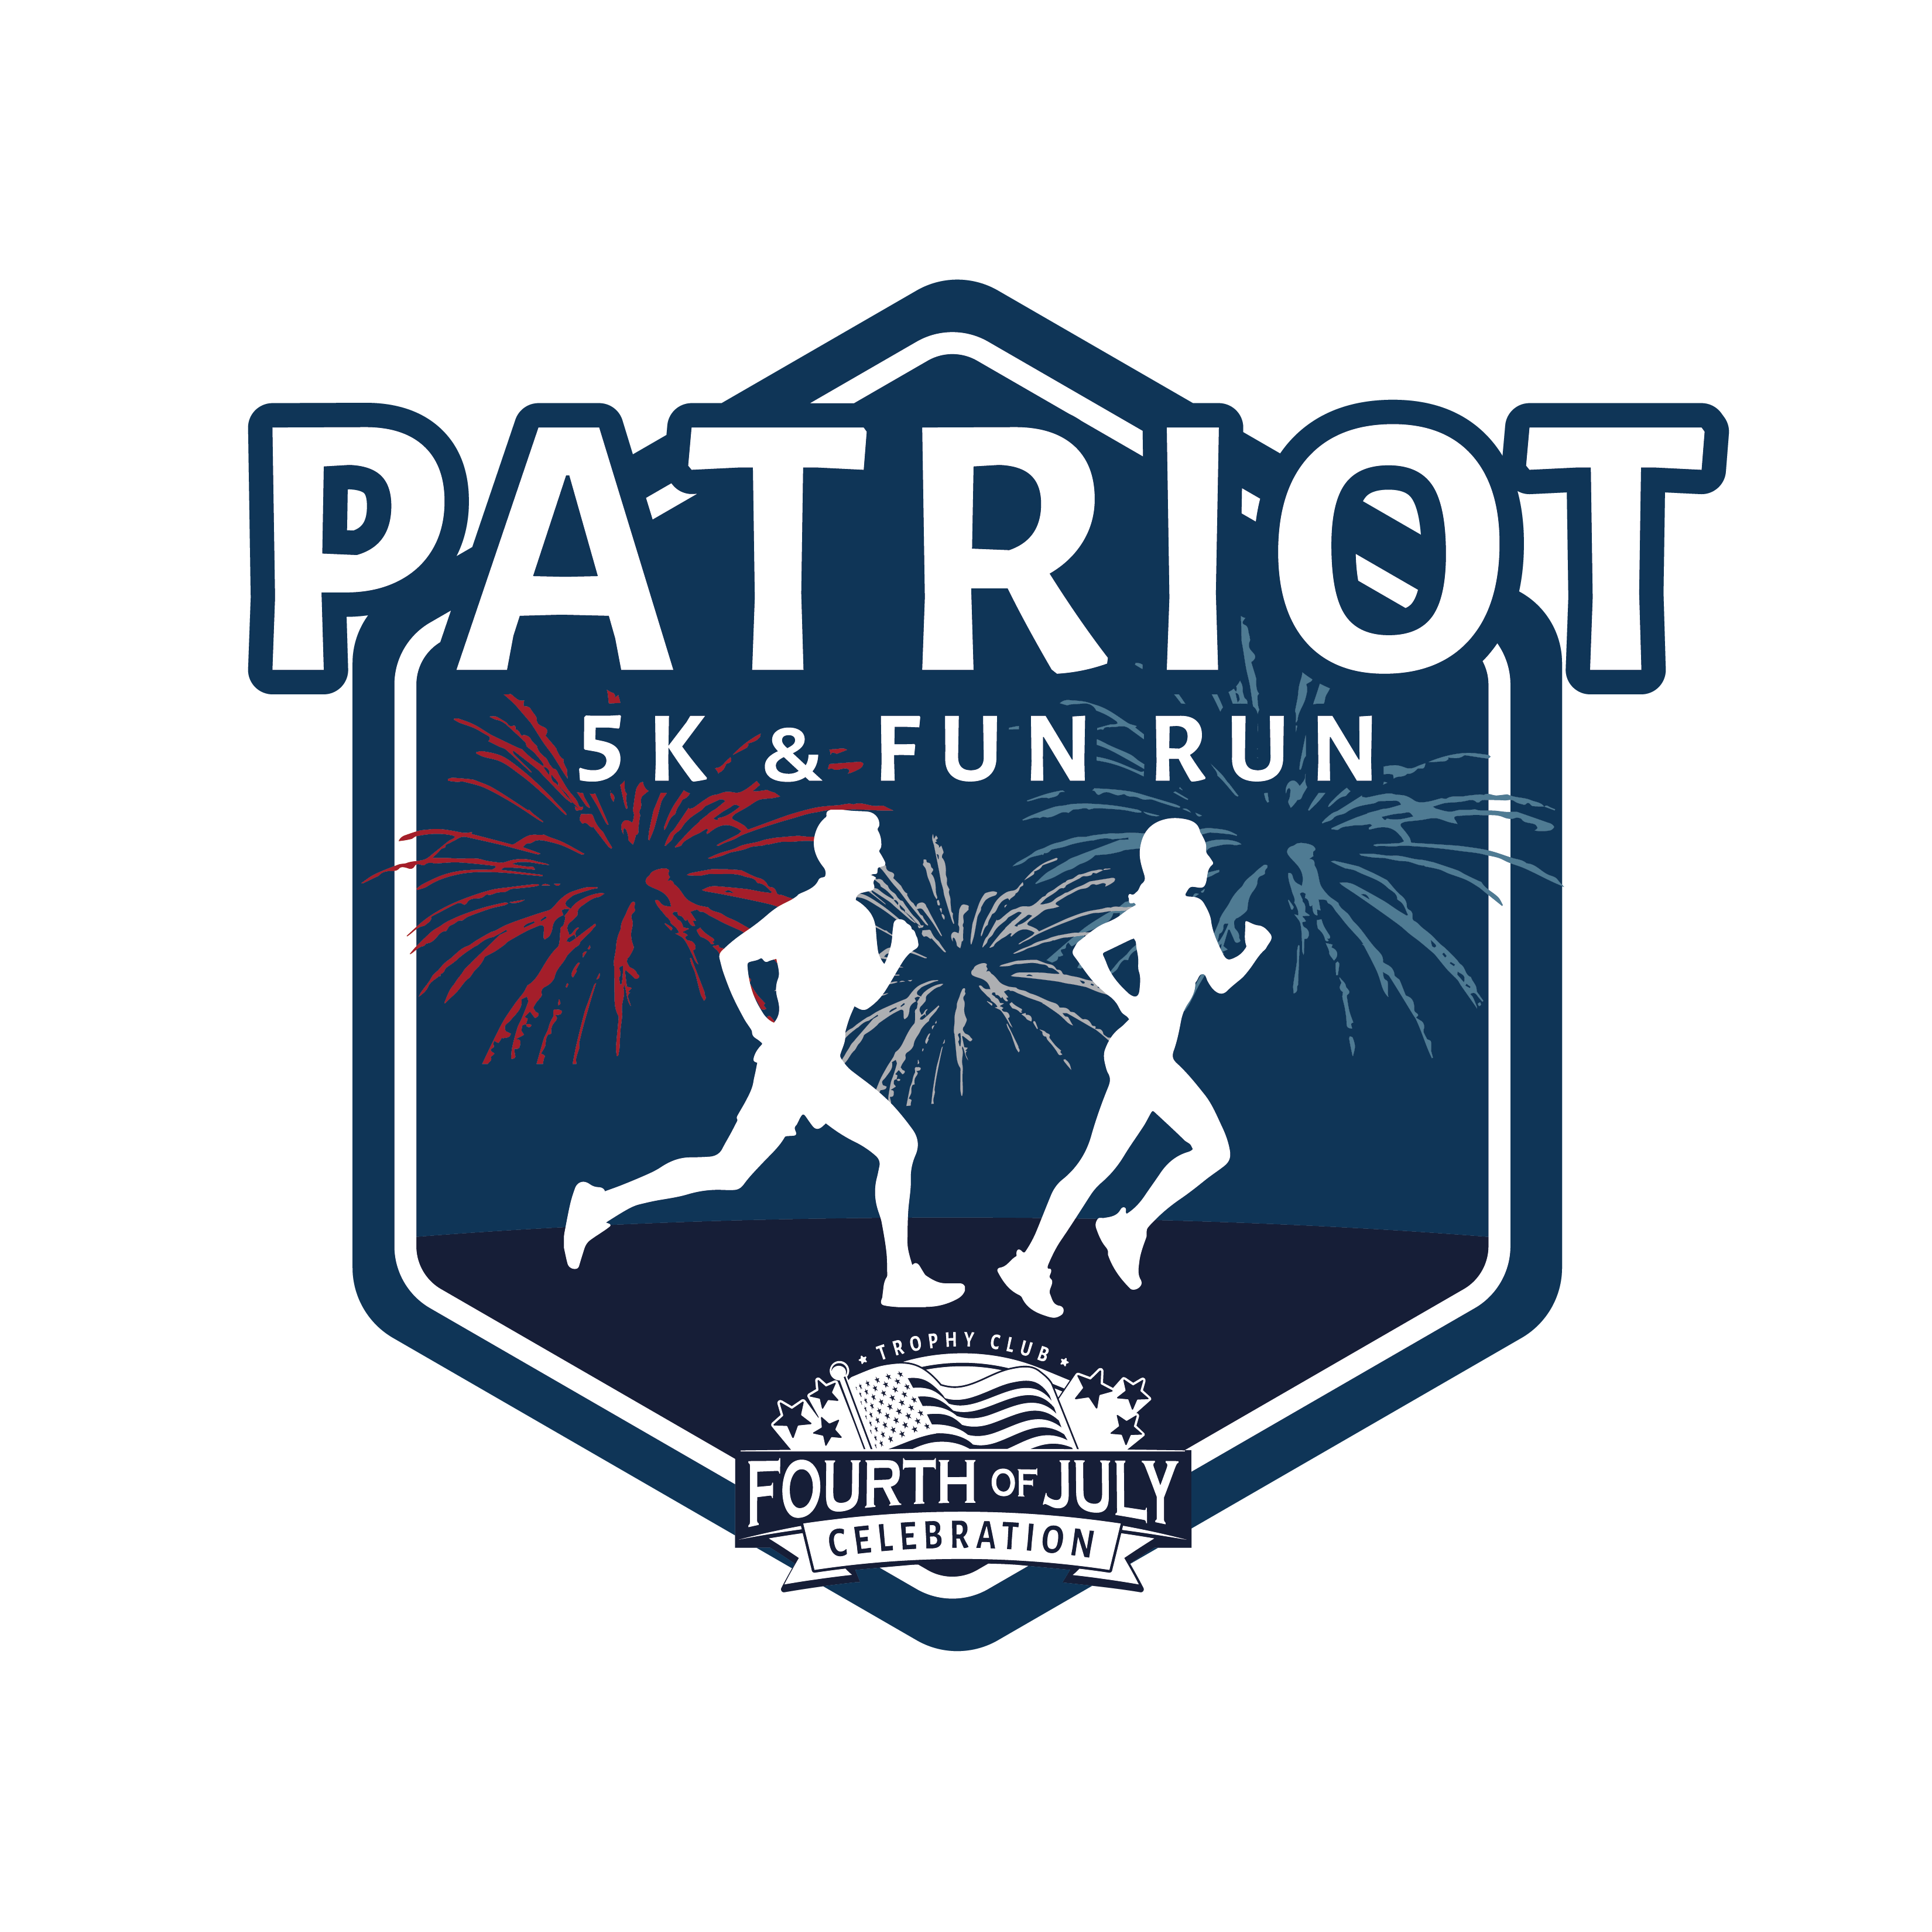 The Patriot Run 5K